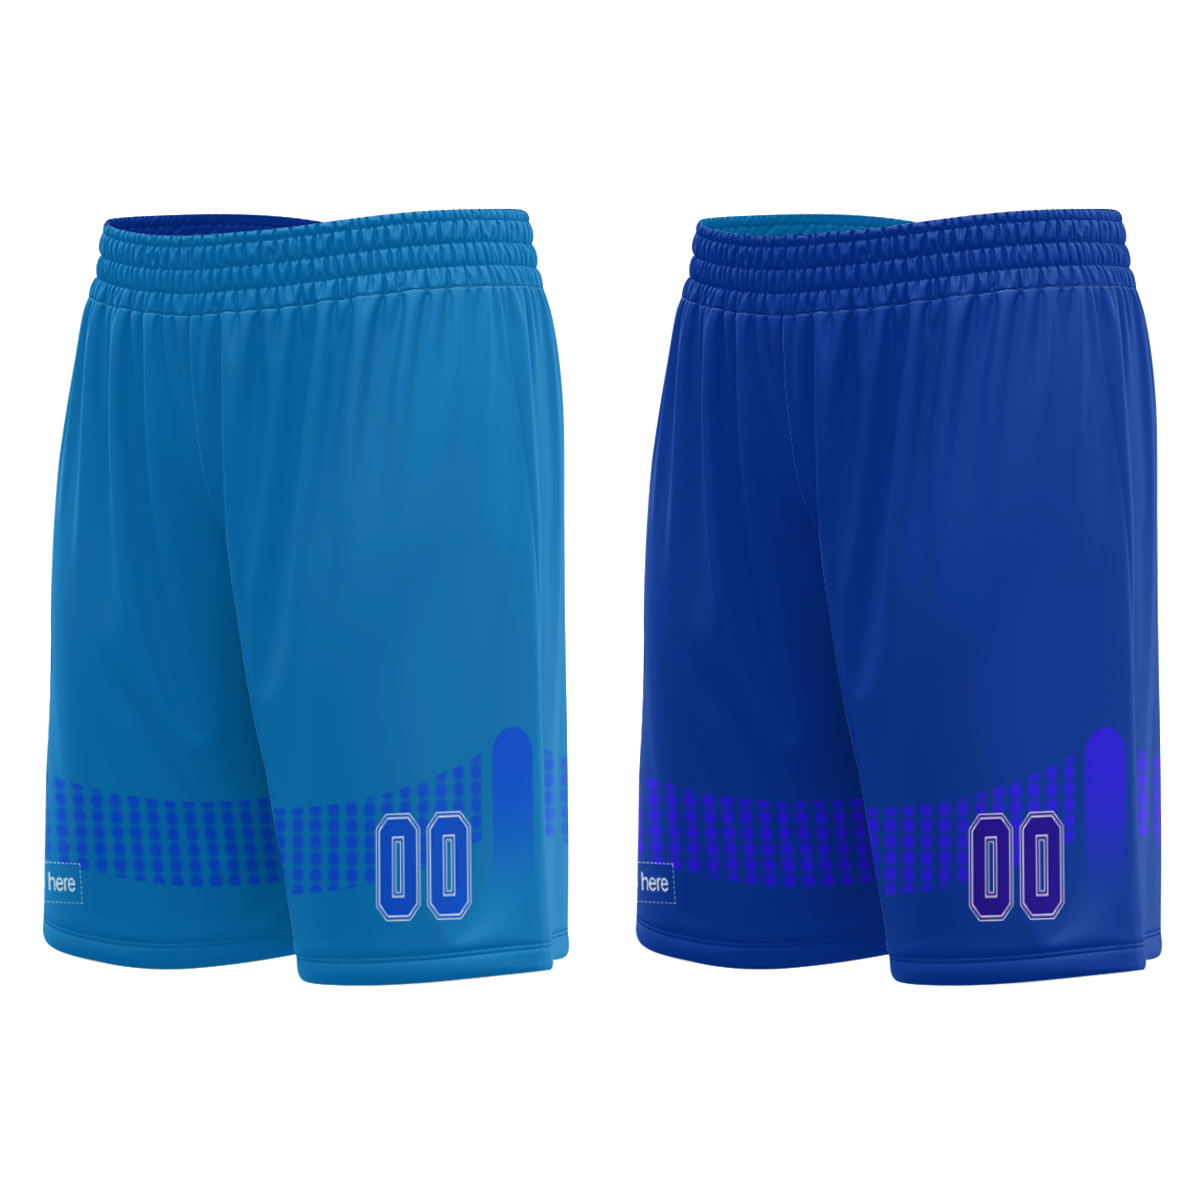 oem-custom-cheap-retro-practice-basketball-jerseys-sublimation-basketball-wear-breathable-quick-dry-basketball-shirts-uniforms-at-cj-pod-8